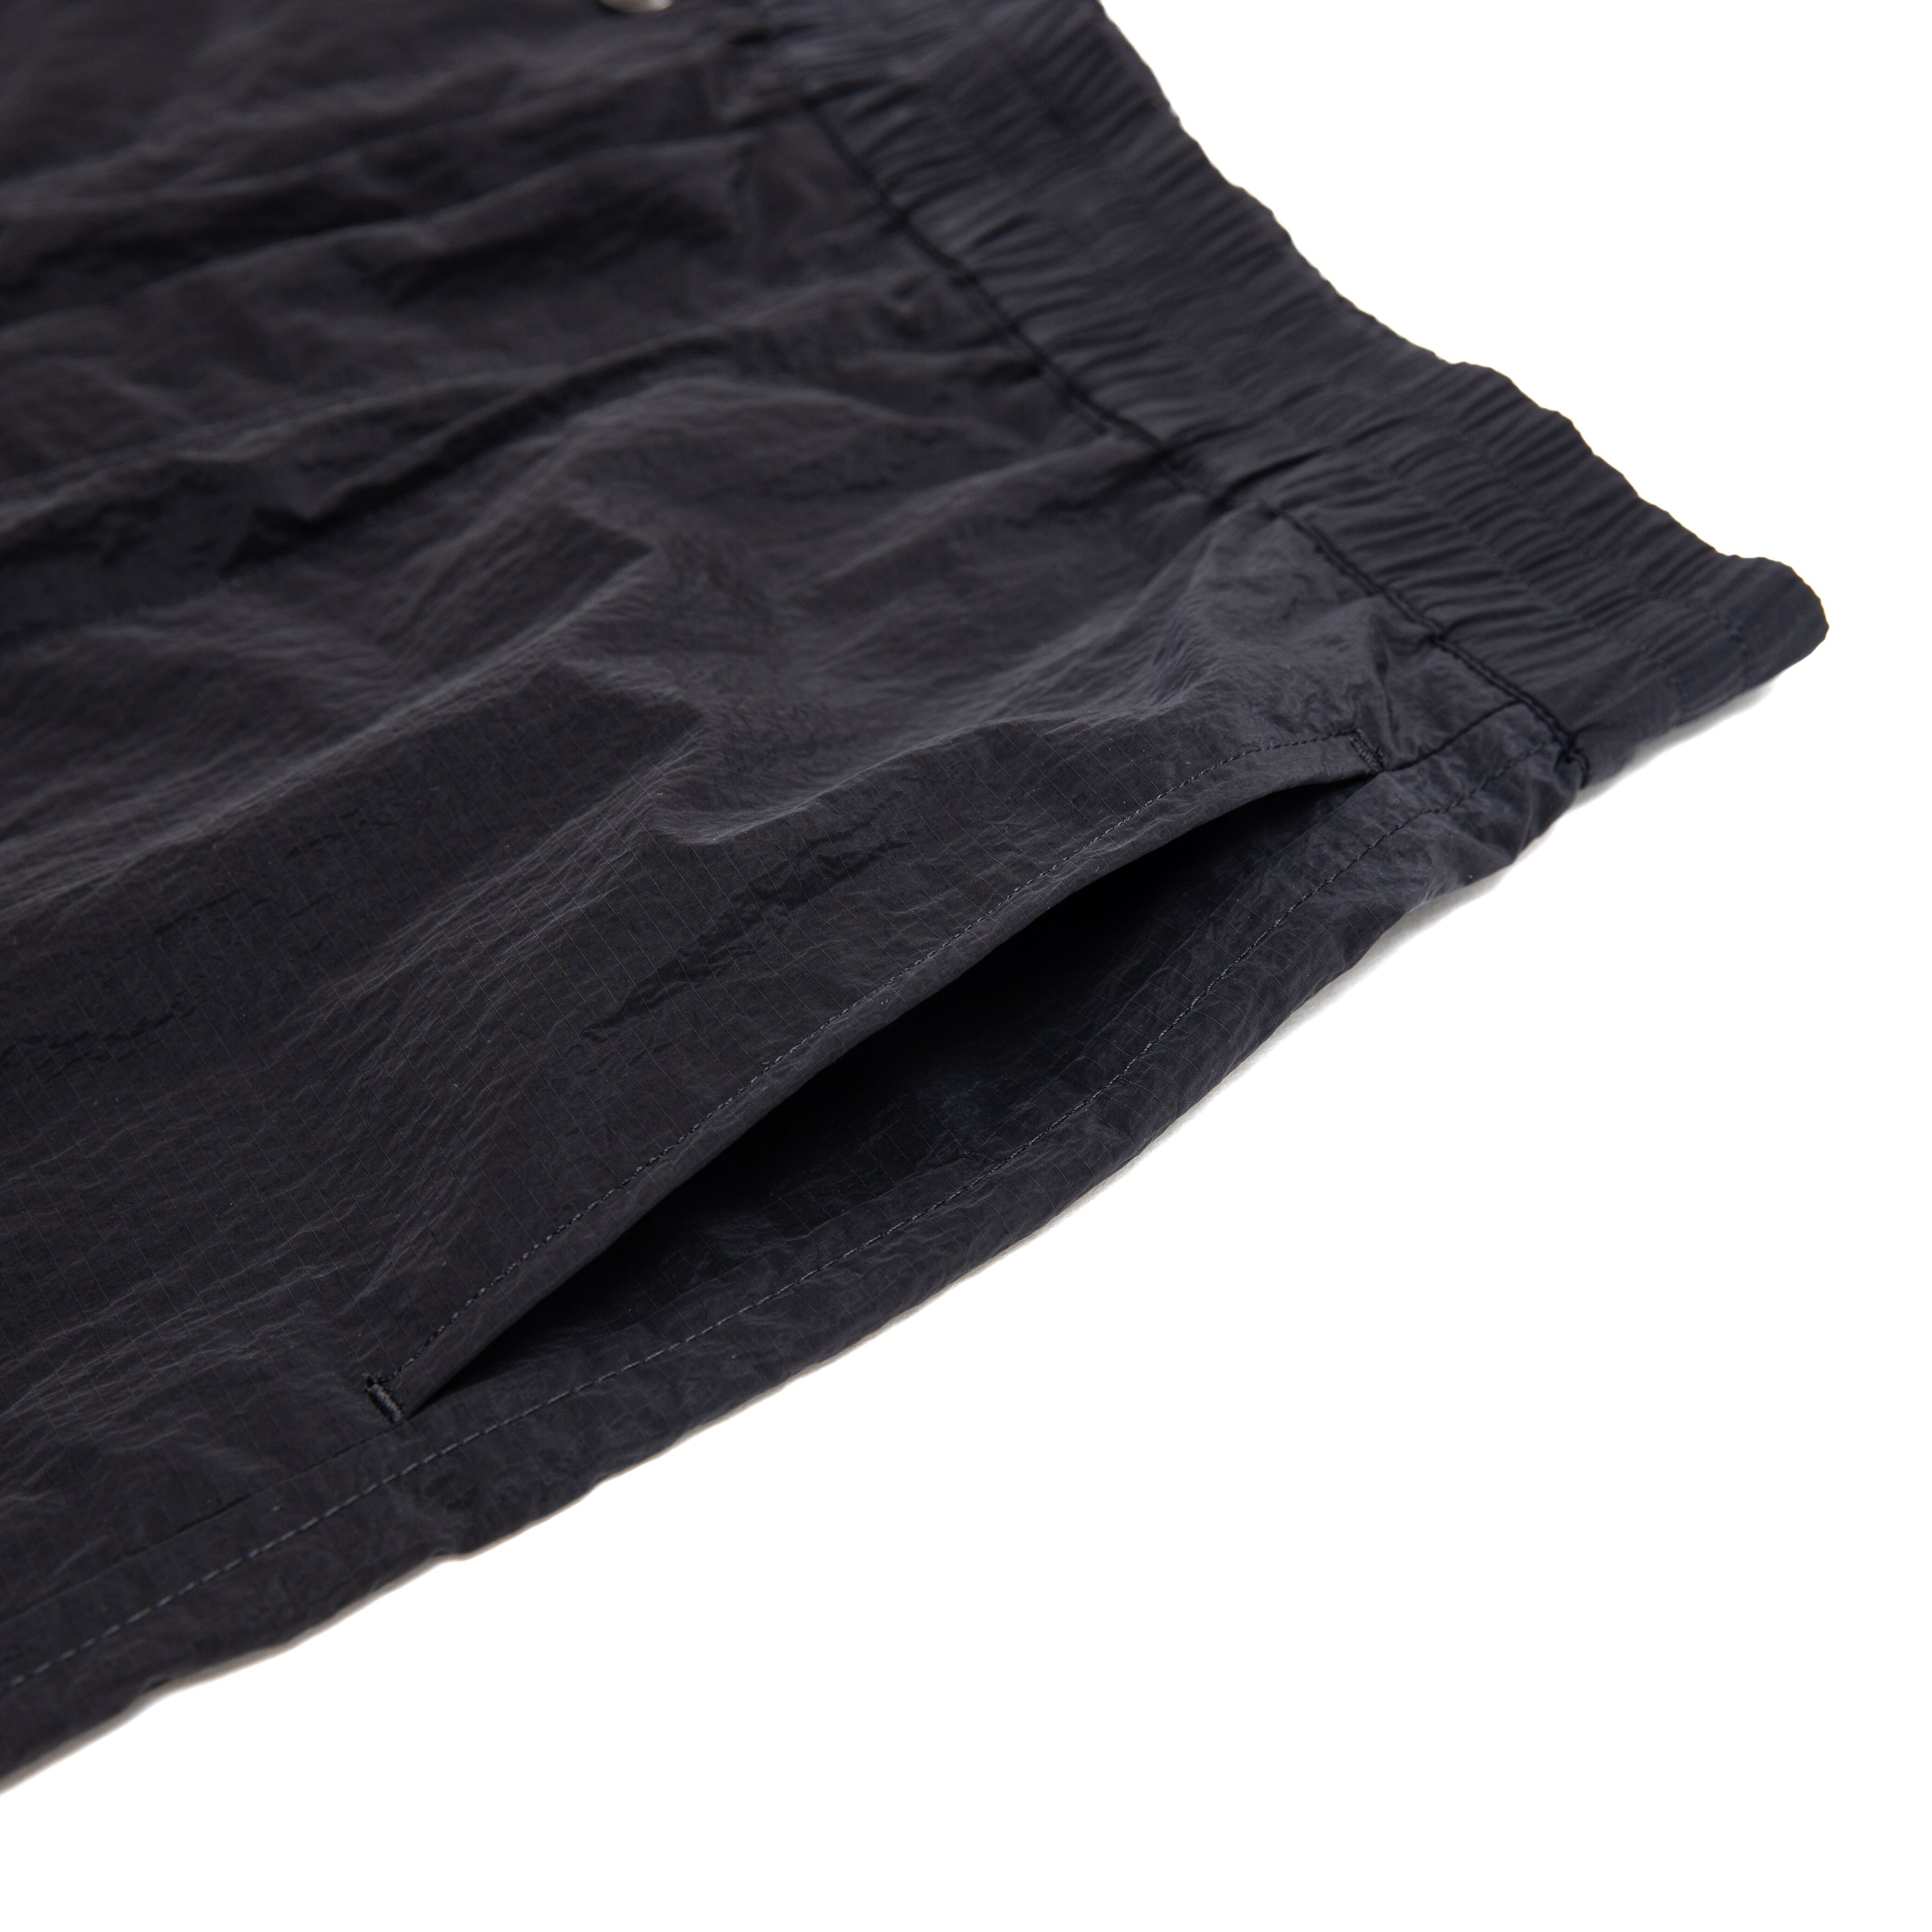 Ripstop Nylon Baggies Shorts (black) | OVY